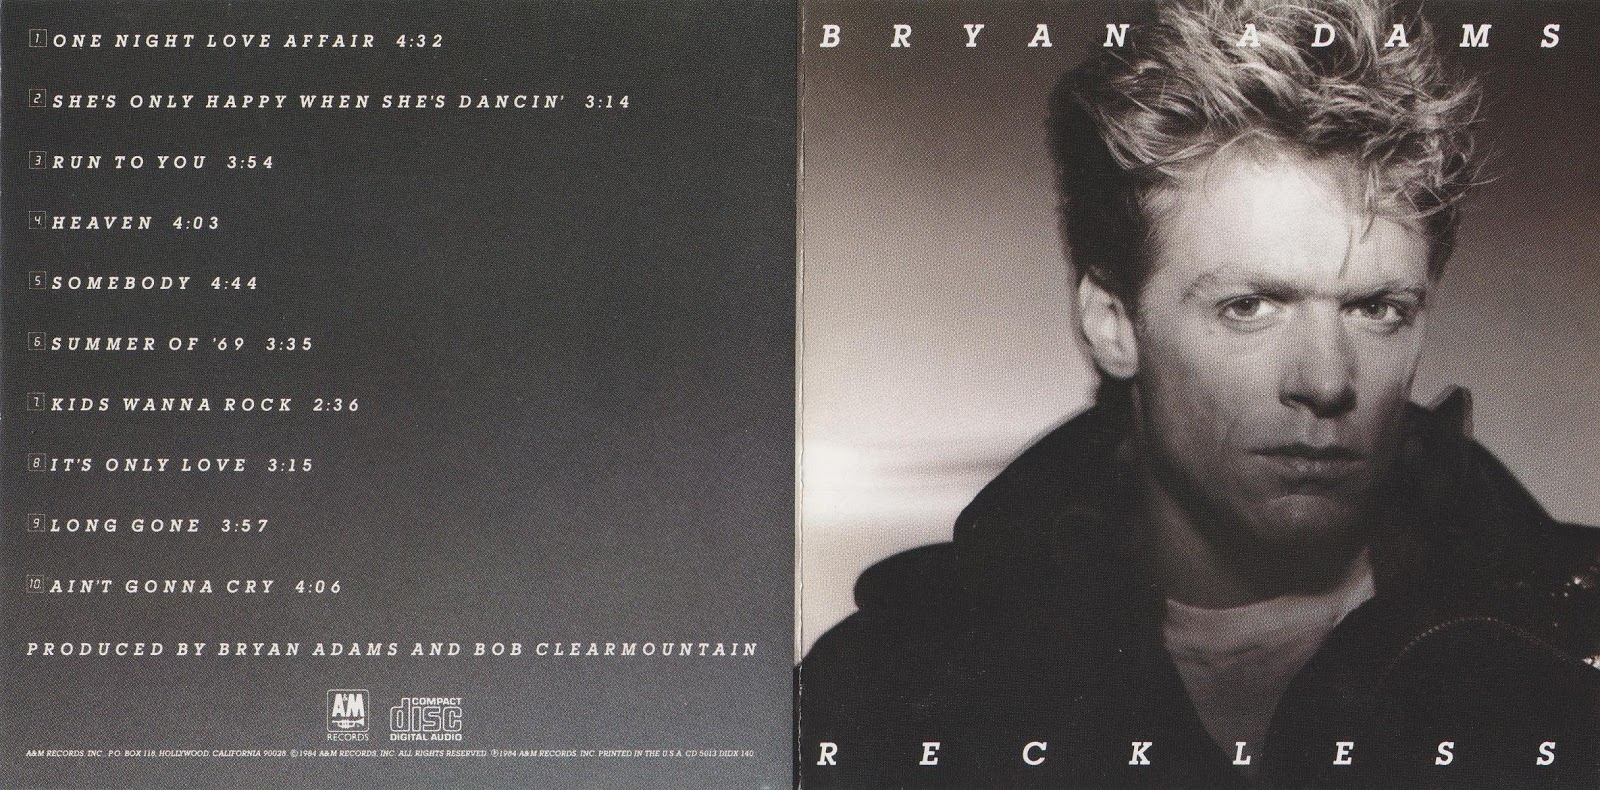 Bryan here. Брайан Адамс 1984. Reckless Брайан Адамс. Bryan Adams Reckless 1984. Bryan Adams 2008.